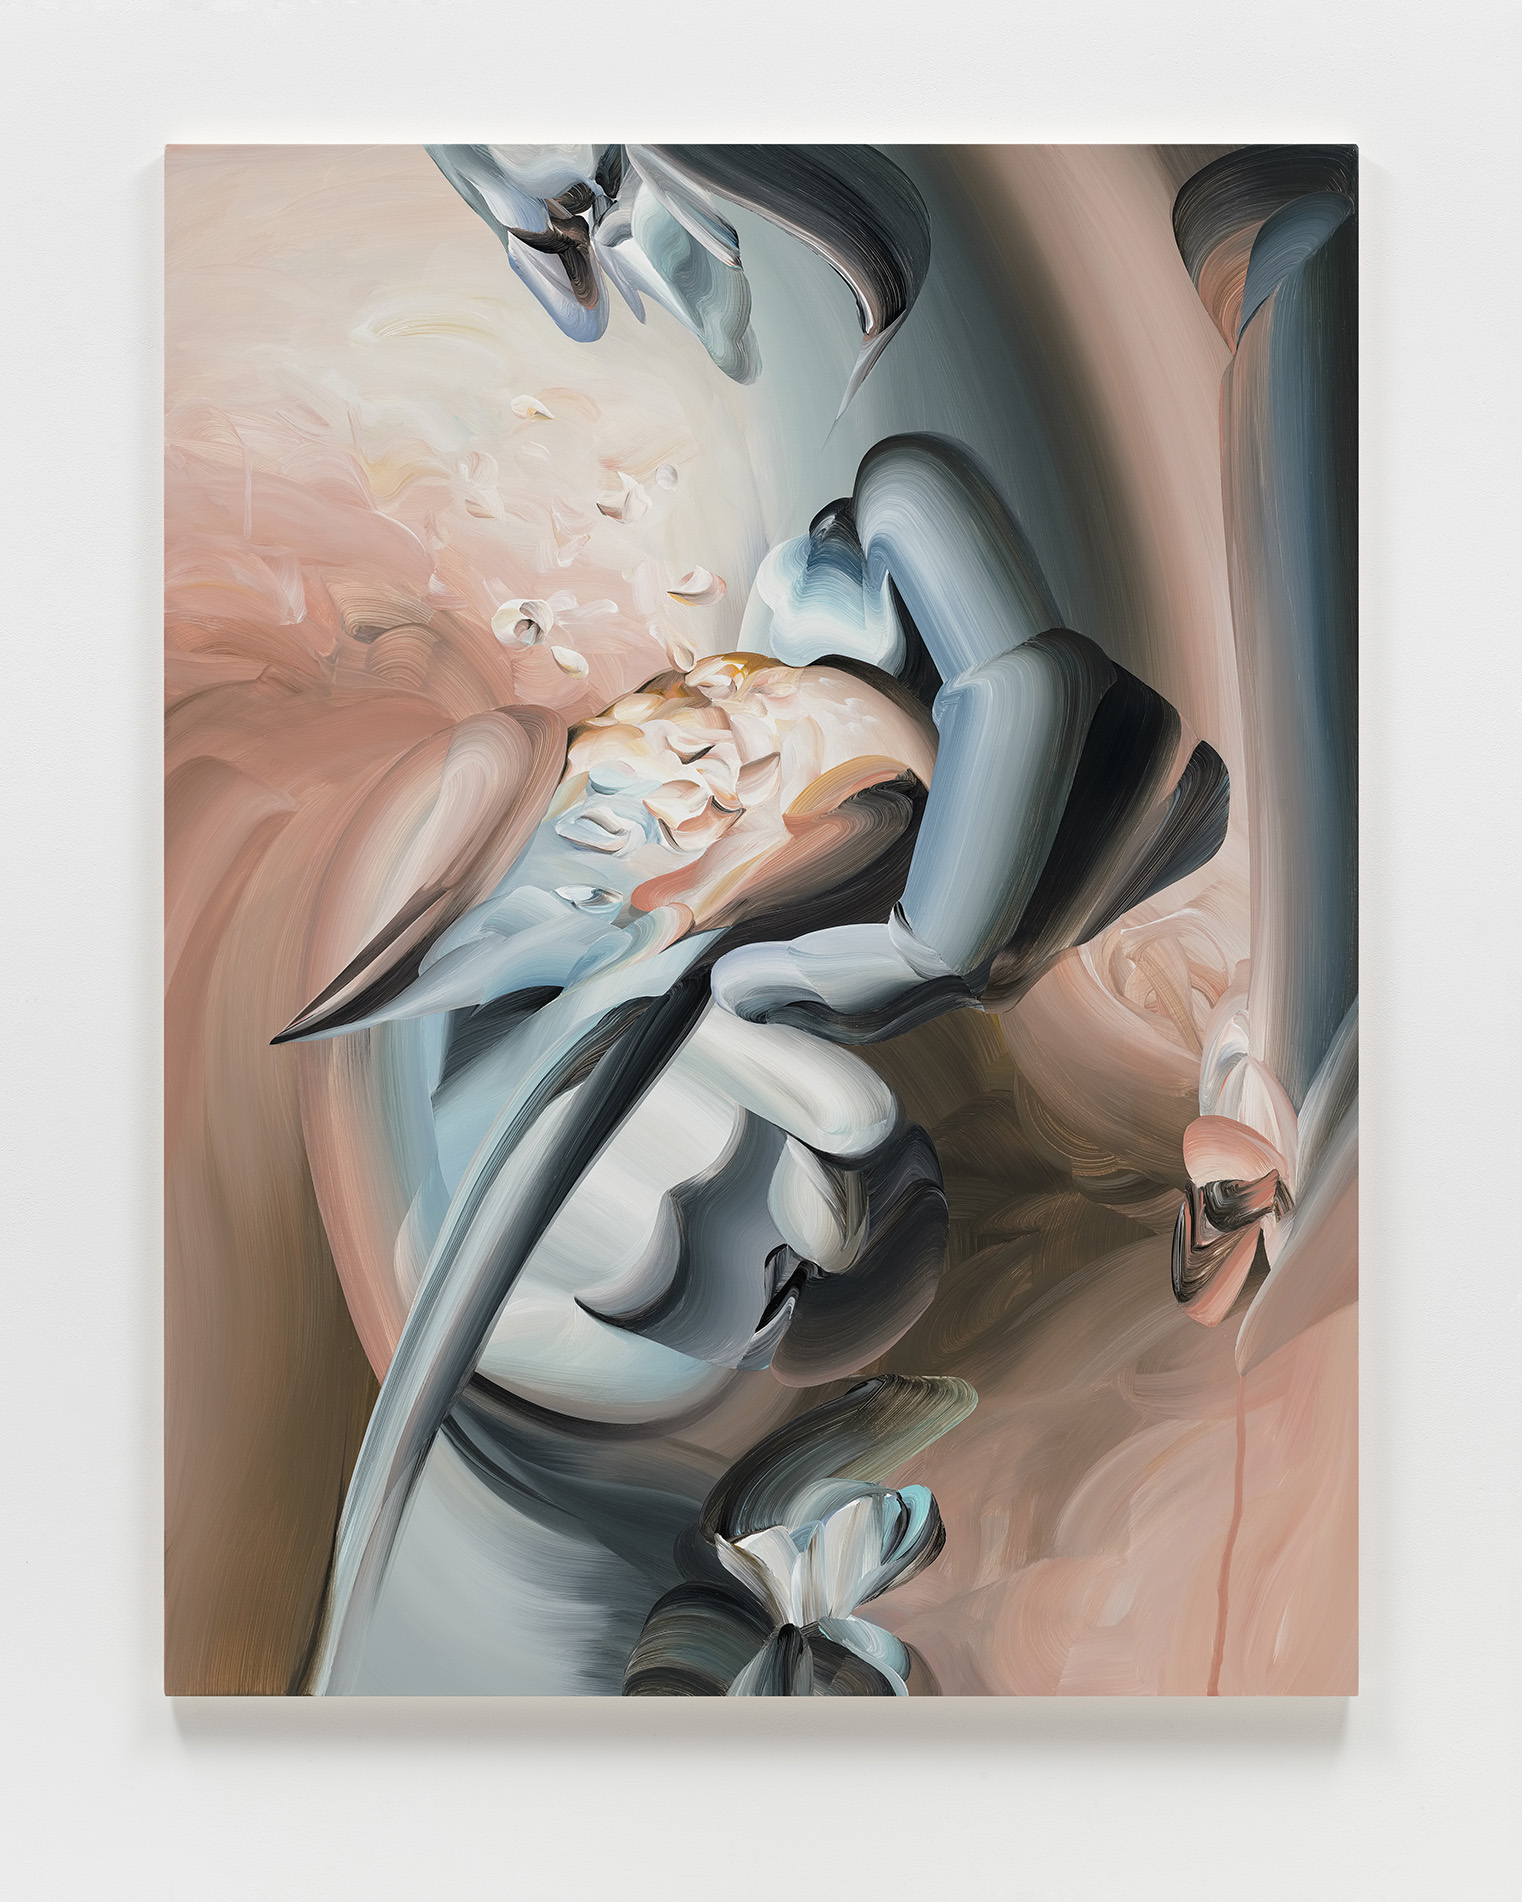 Huang Ko Wei, Night, 2021, acrylic on canvas
65 x 50 cm